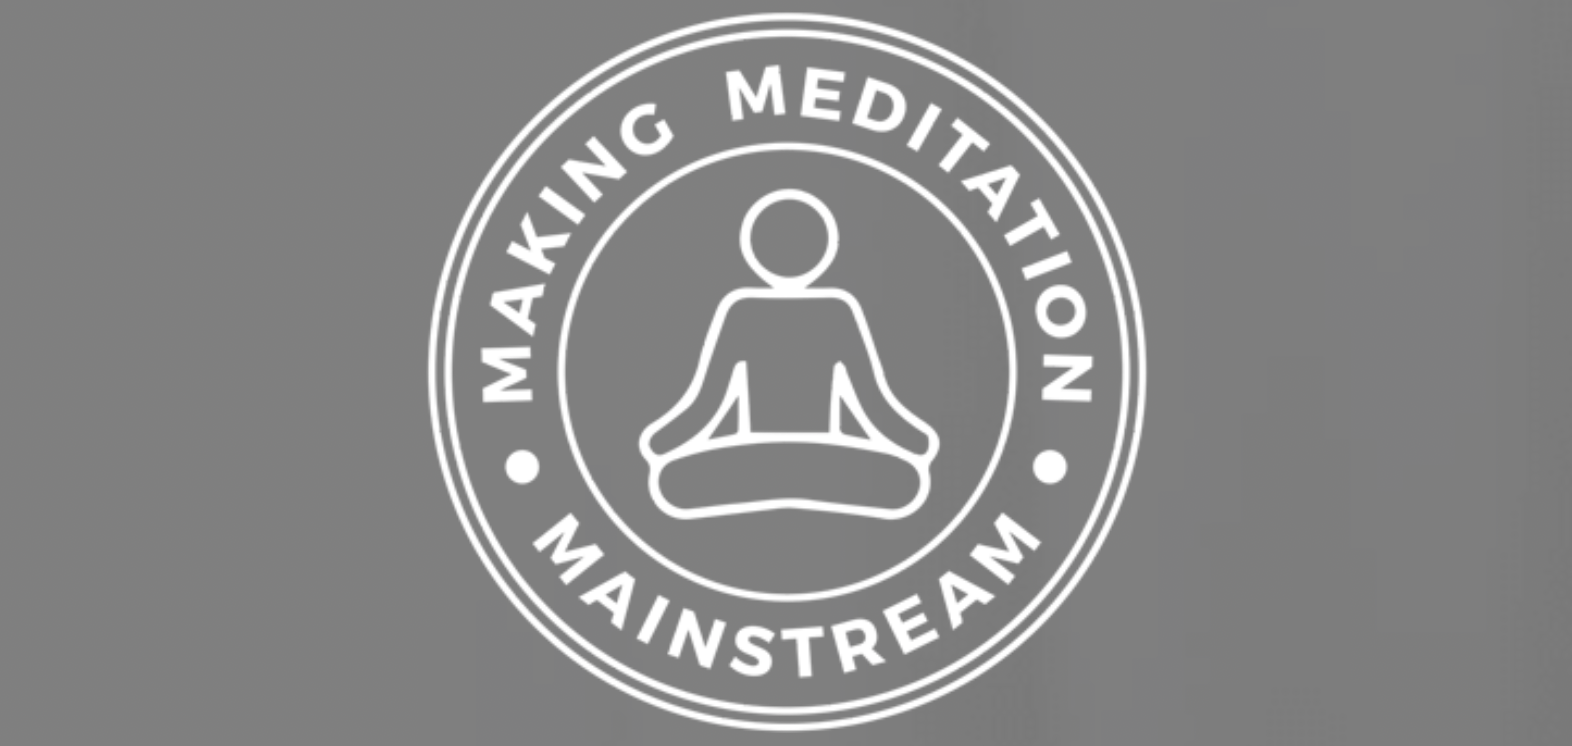 Making Meditation Mainstream raises over $30,000 for Lifeline with 28 for Twenty Eight initiative